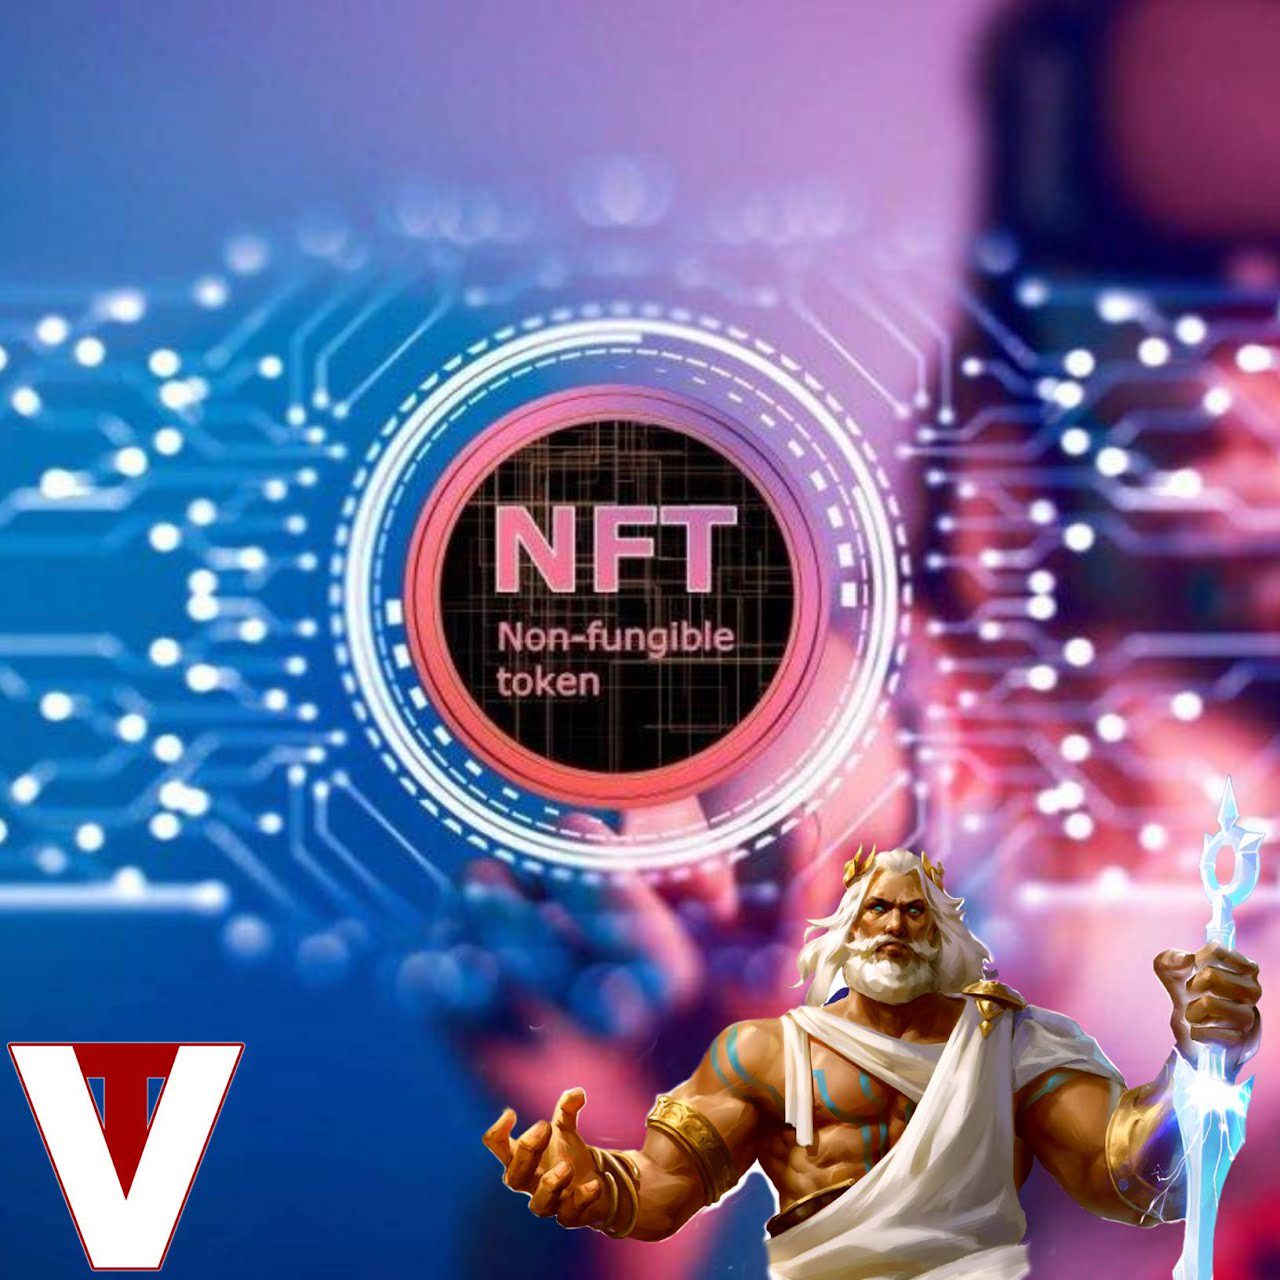 Non-fungible token, NFT info, vitalytennant.com, vitaly tennant